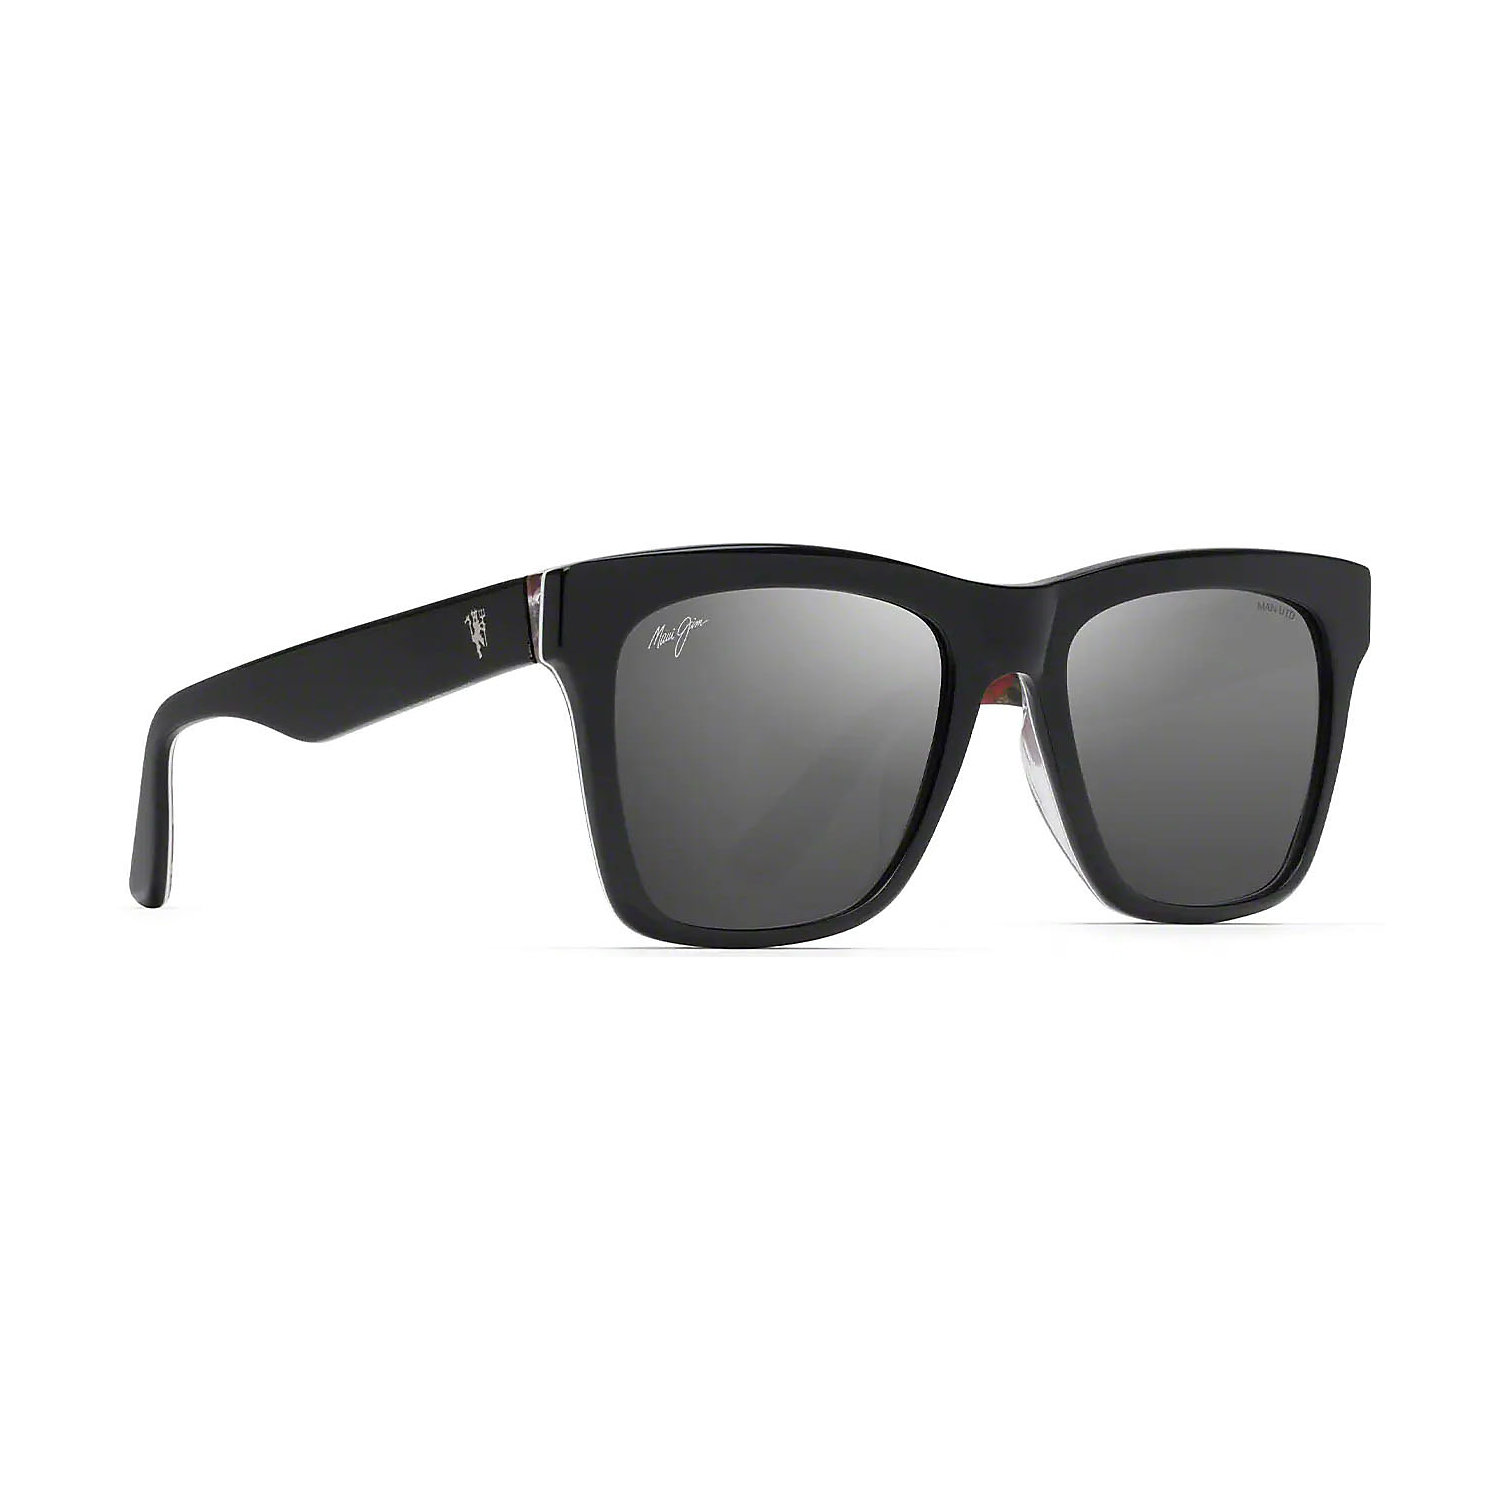 Maui Jim Manchester United Matchday Polarized Sunglasses